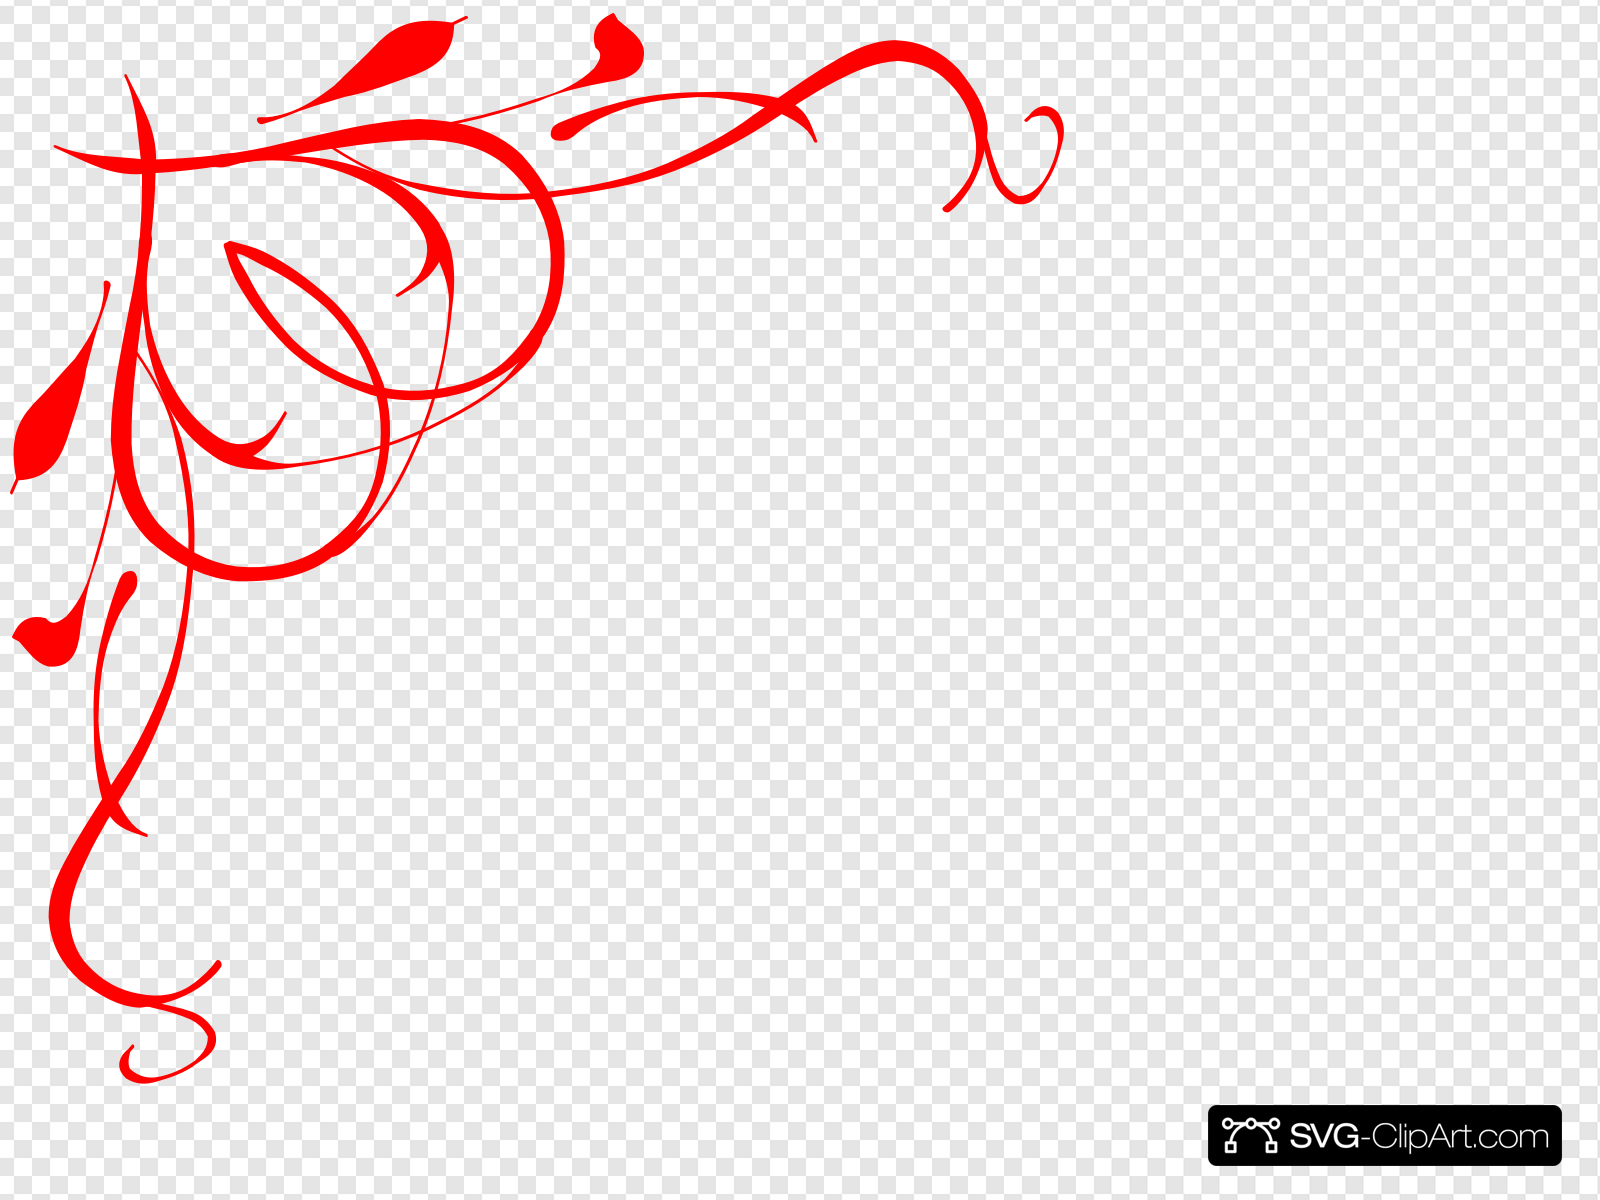 Heart Border Clip art, Icon and SVG.